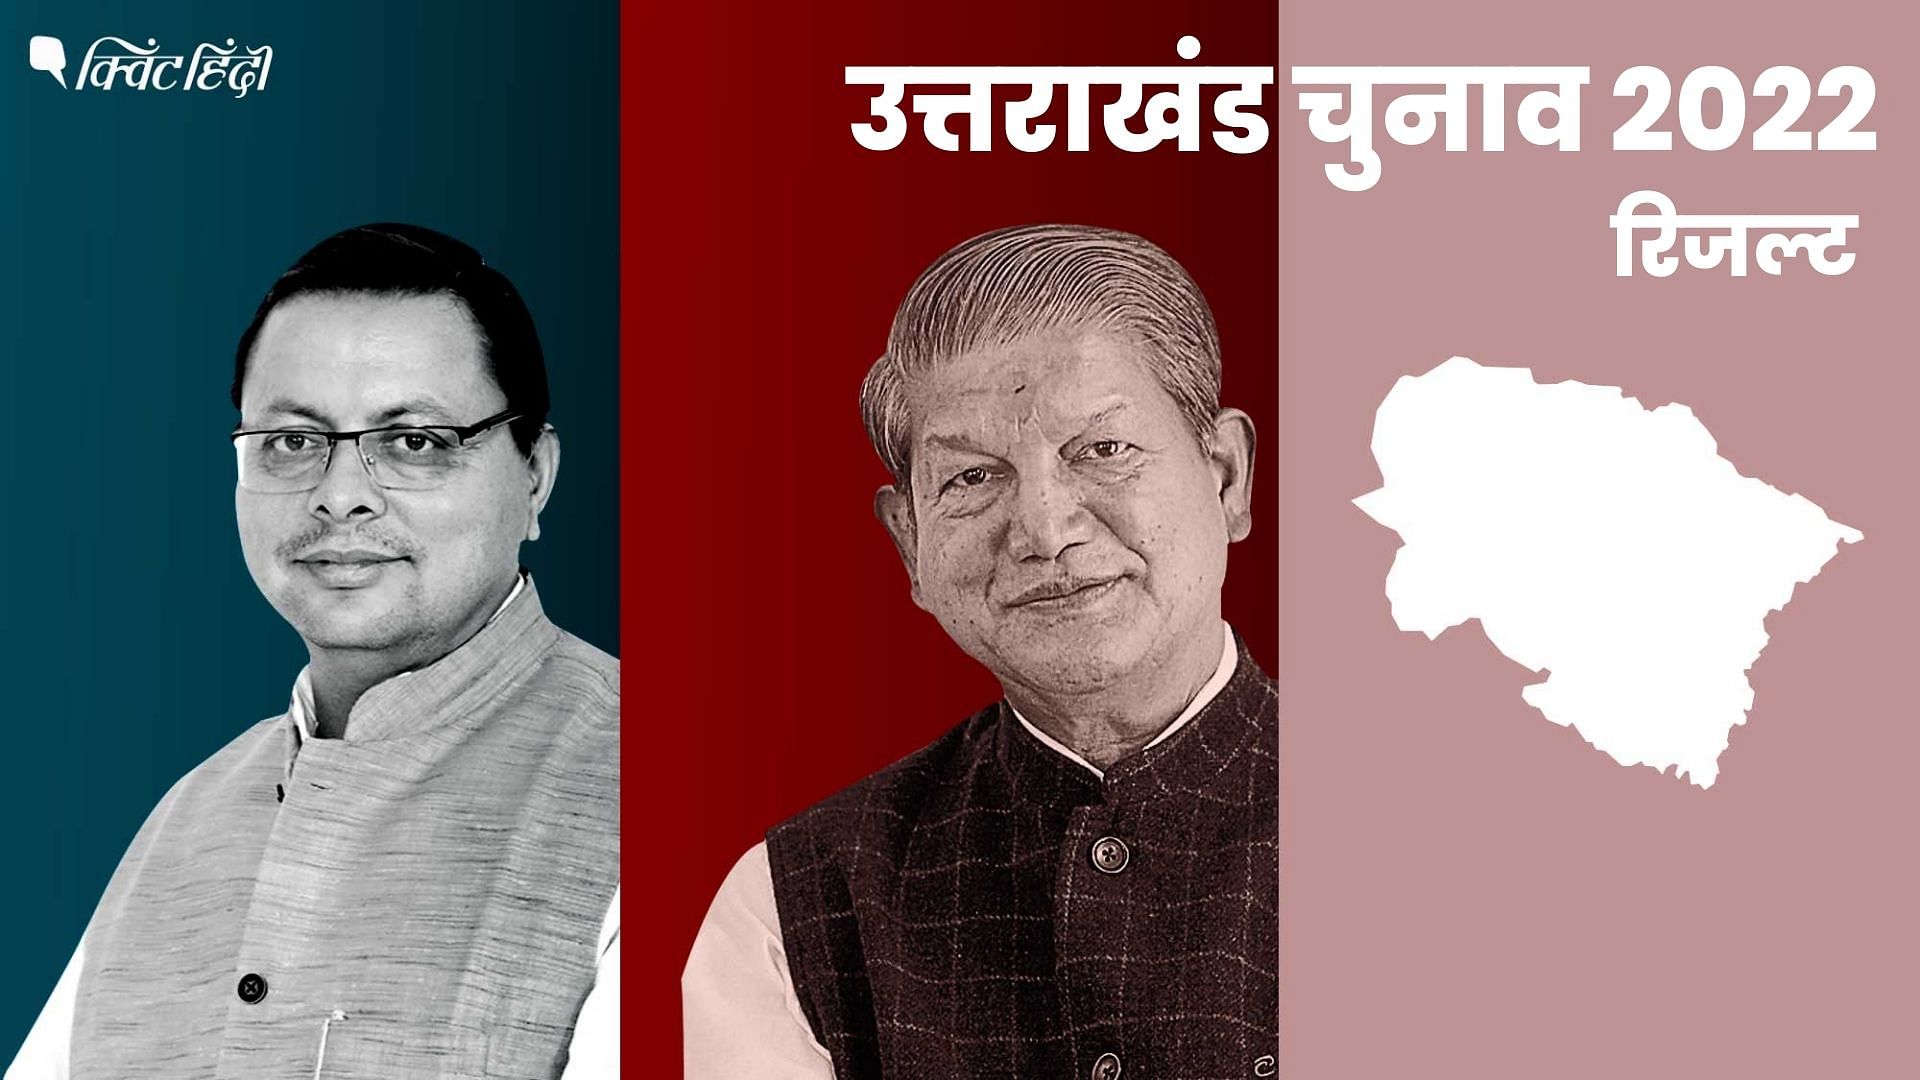 <div class="paragraphs"><p>Uttarakhand Poll 2022 Results LIVE</p></div>